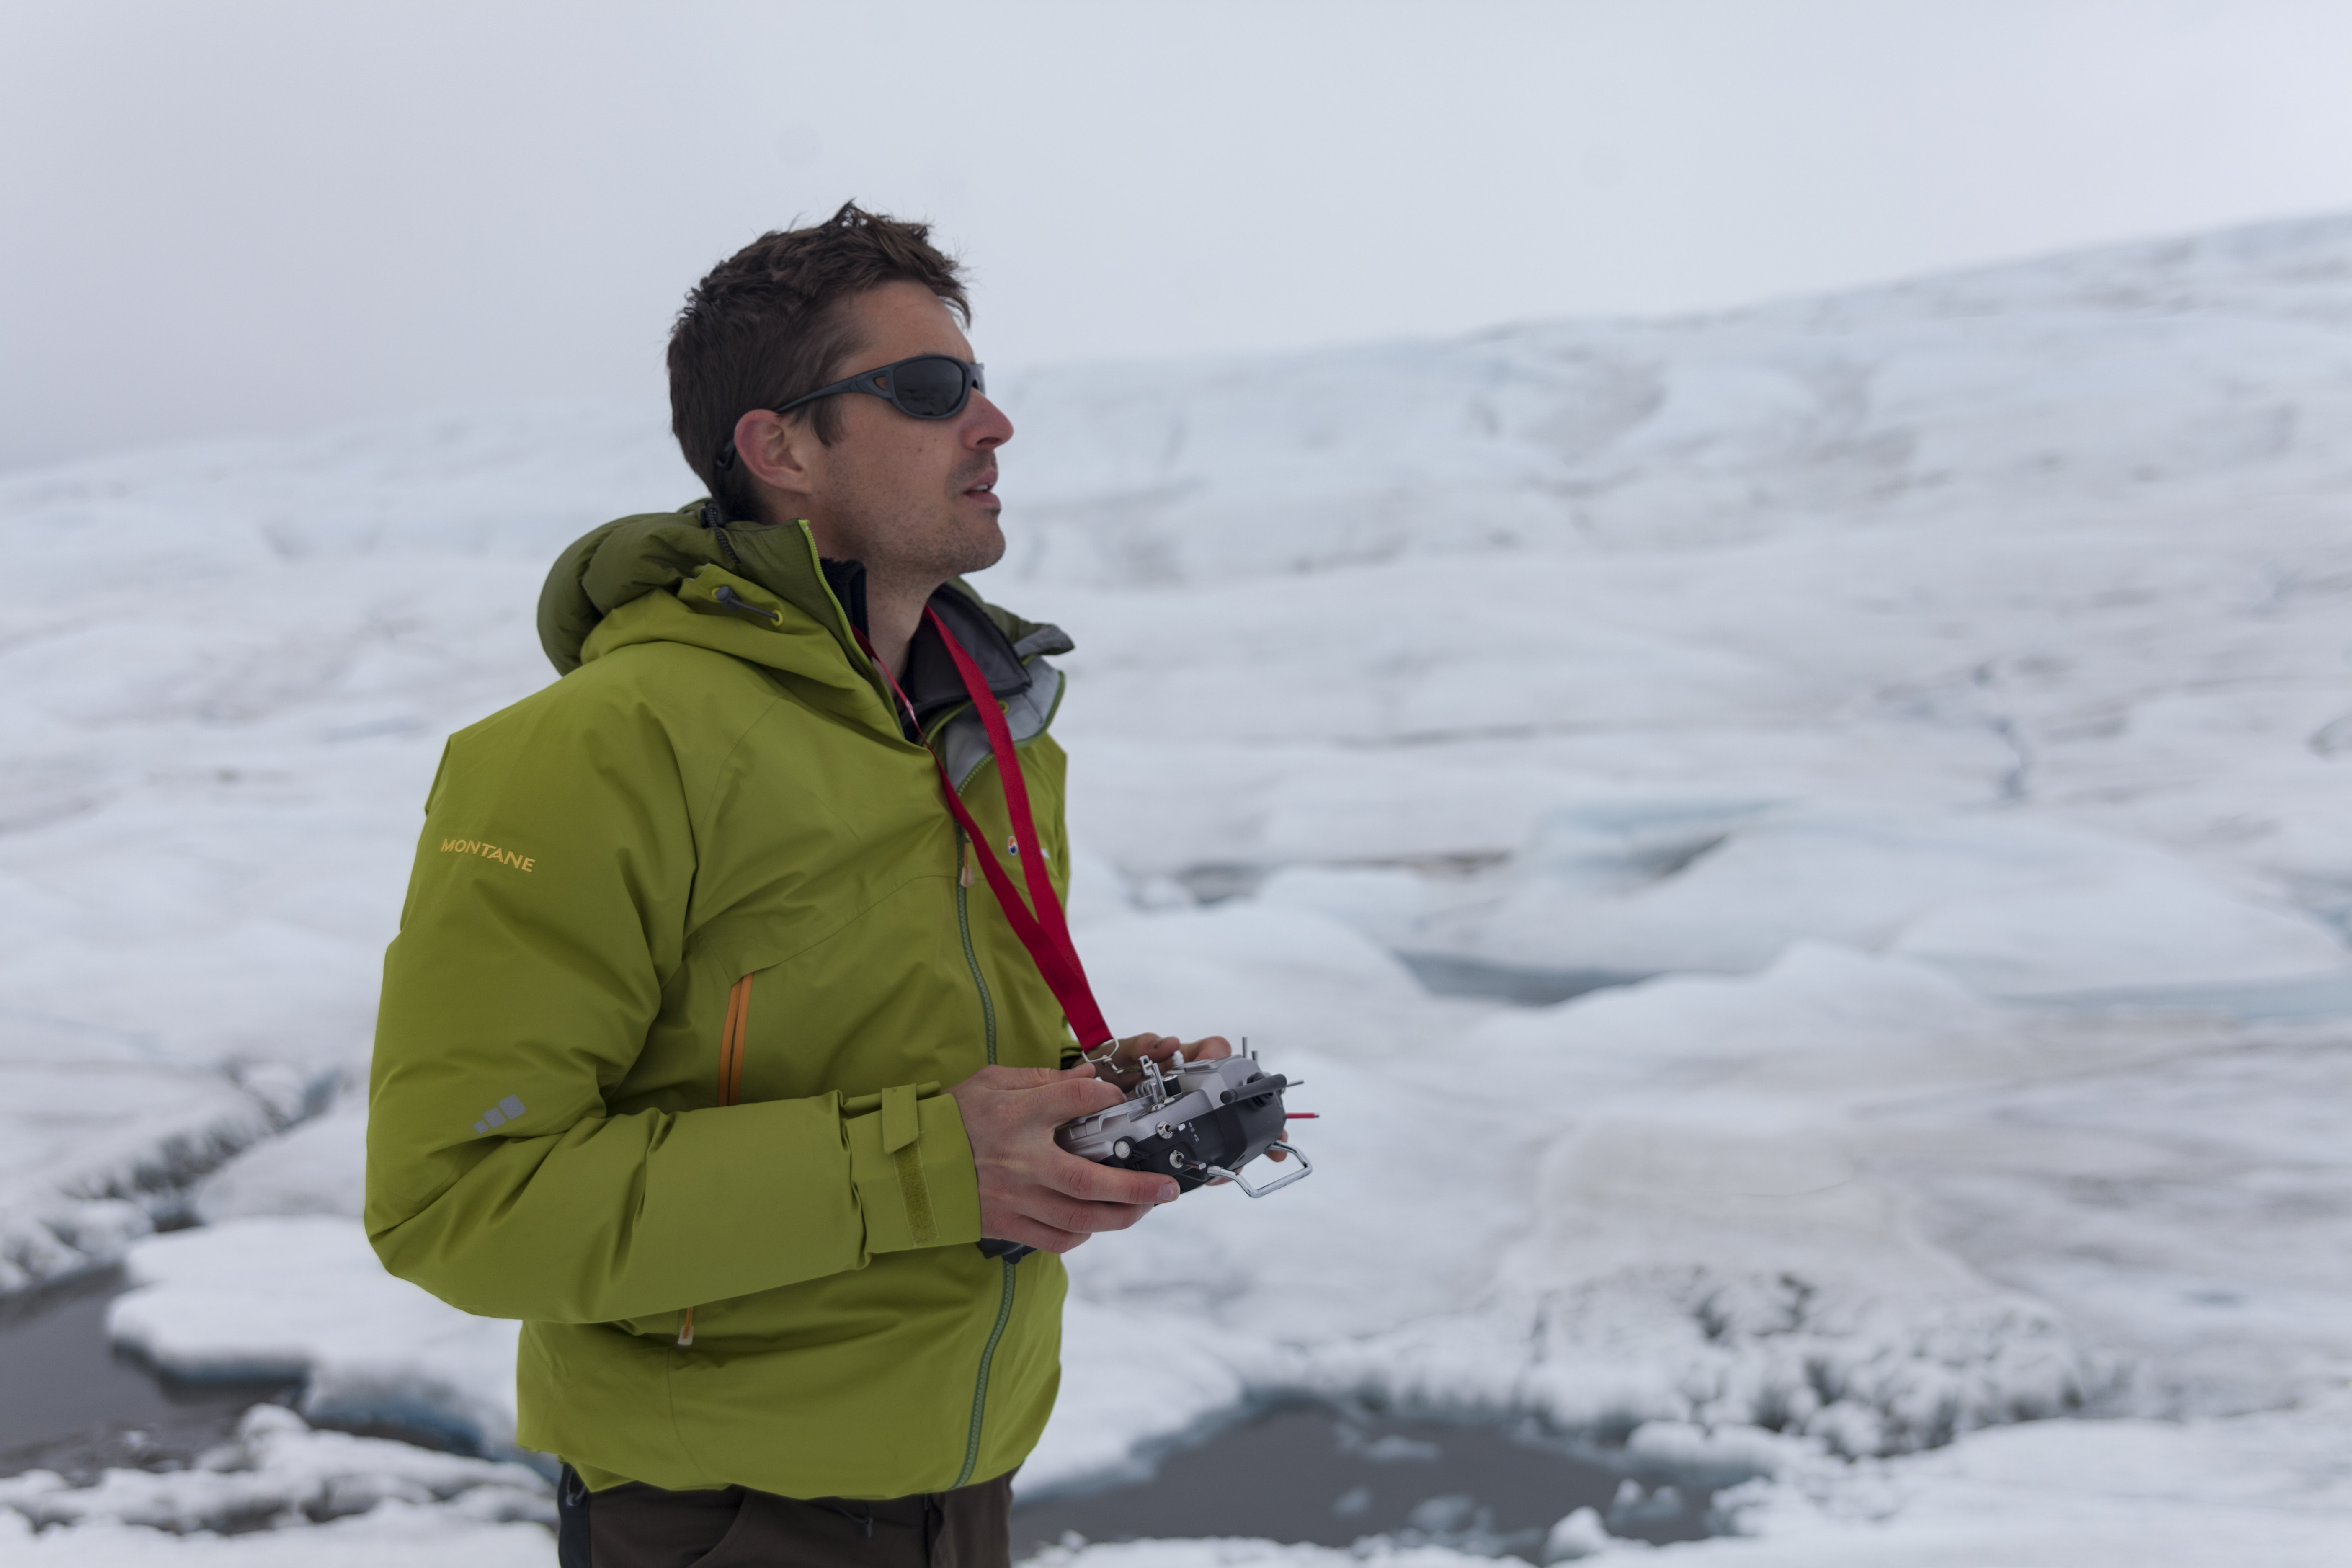 Joseph Cook piloting a drone in a snowy landscape